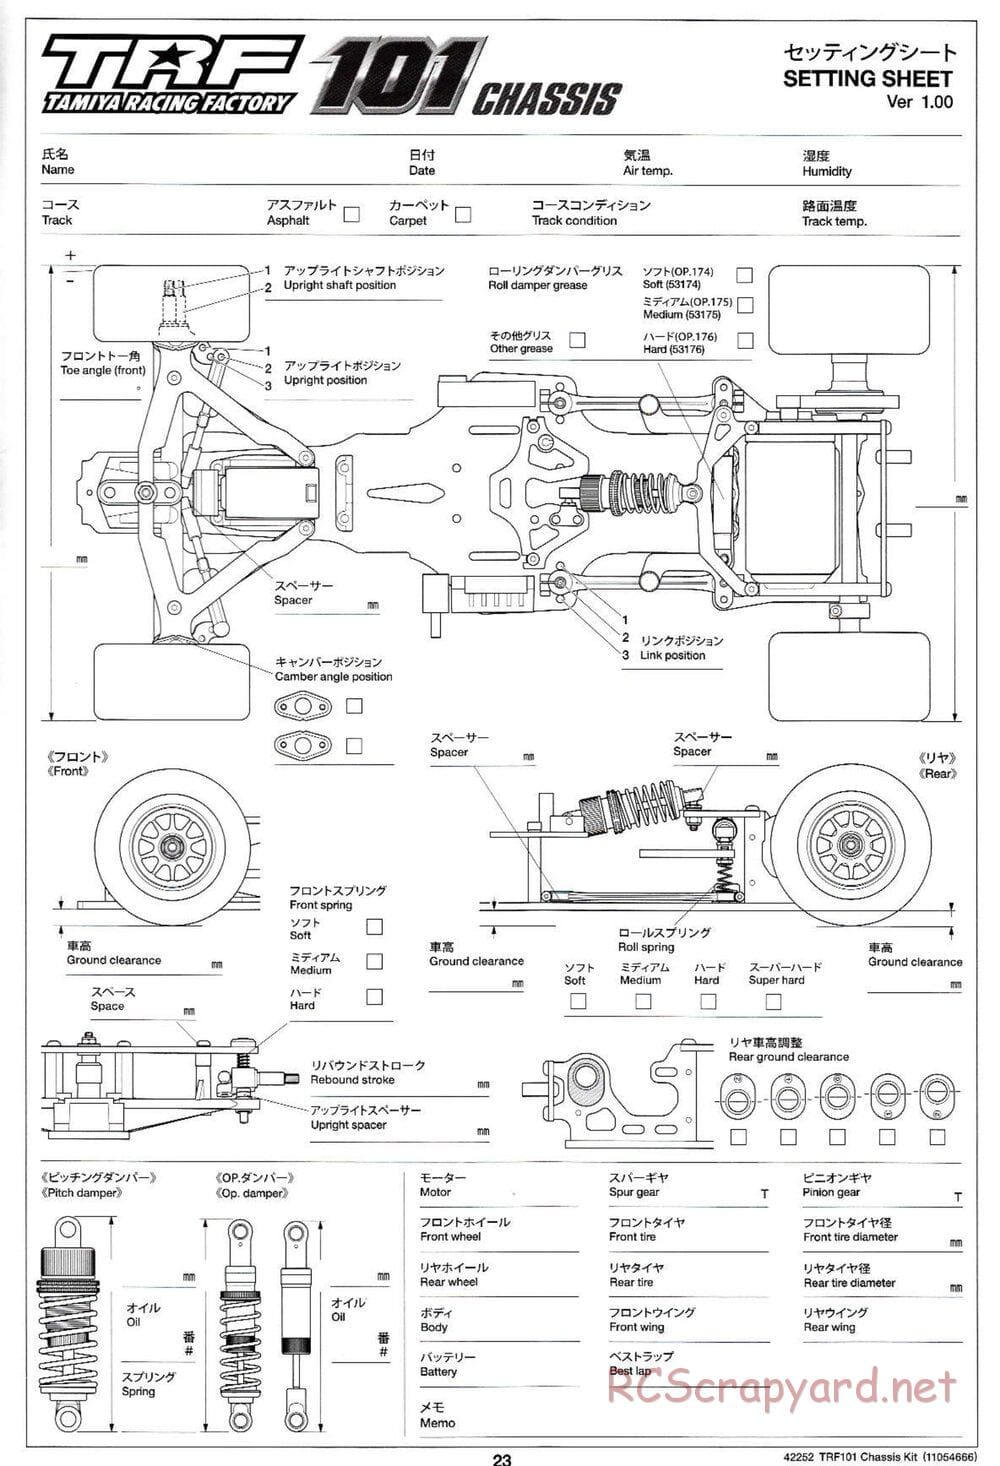 Tamiya - TRF101 Chassis - Manual - Page 23